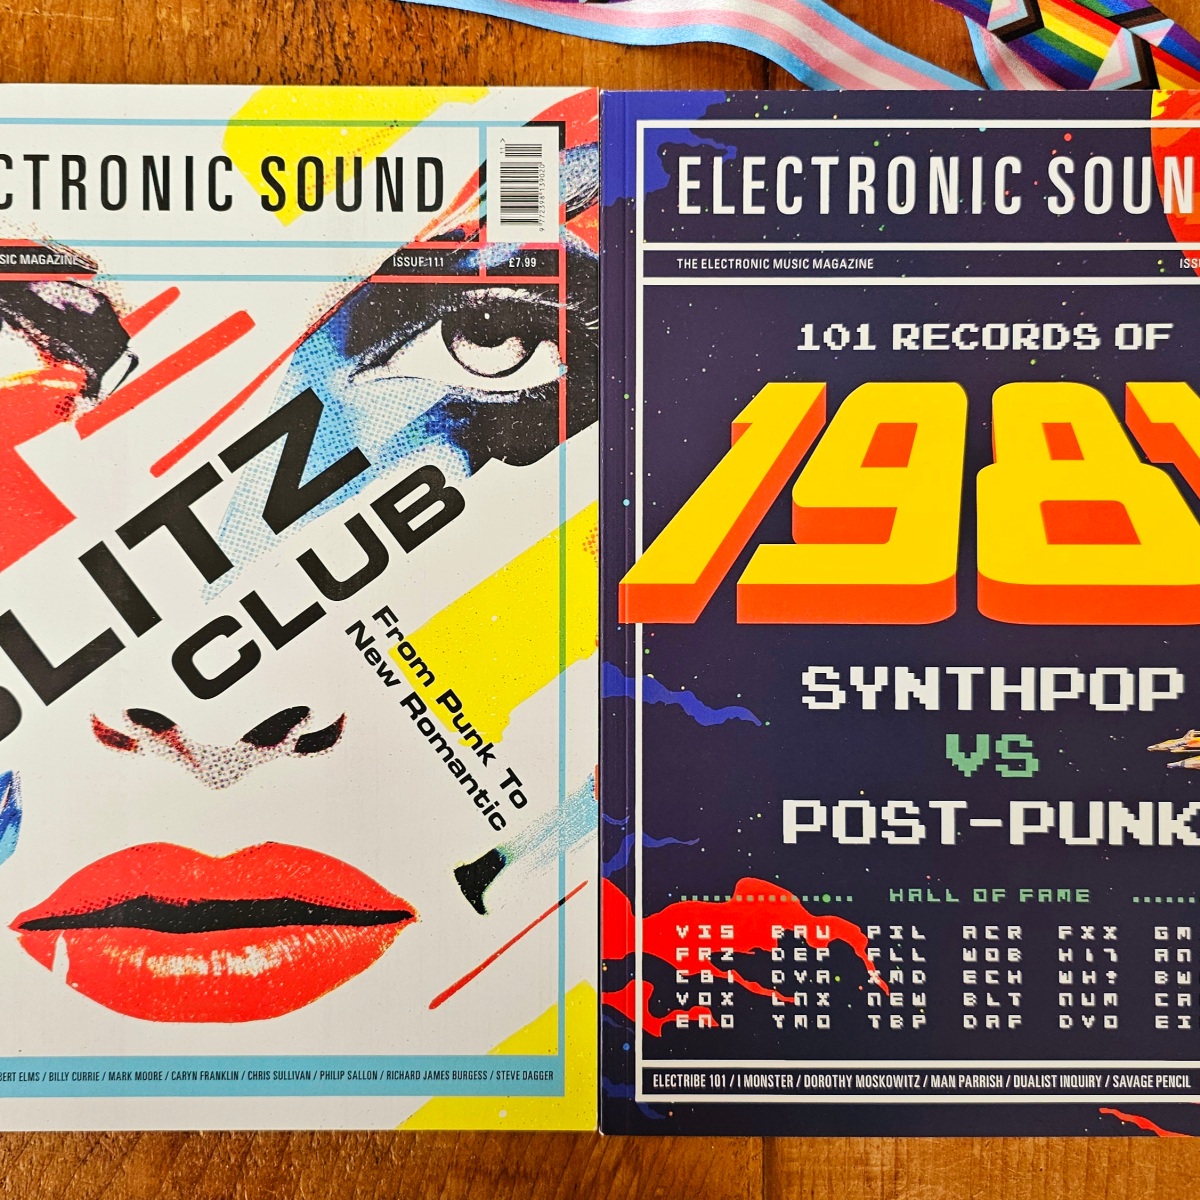 “Electronic Sound” magazine cites 1981 as a pivotal year